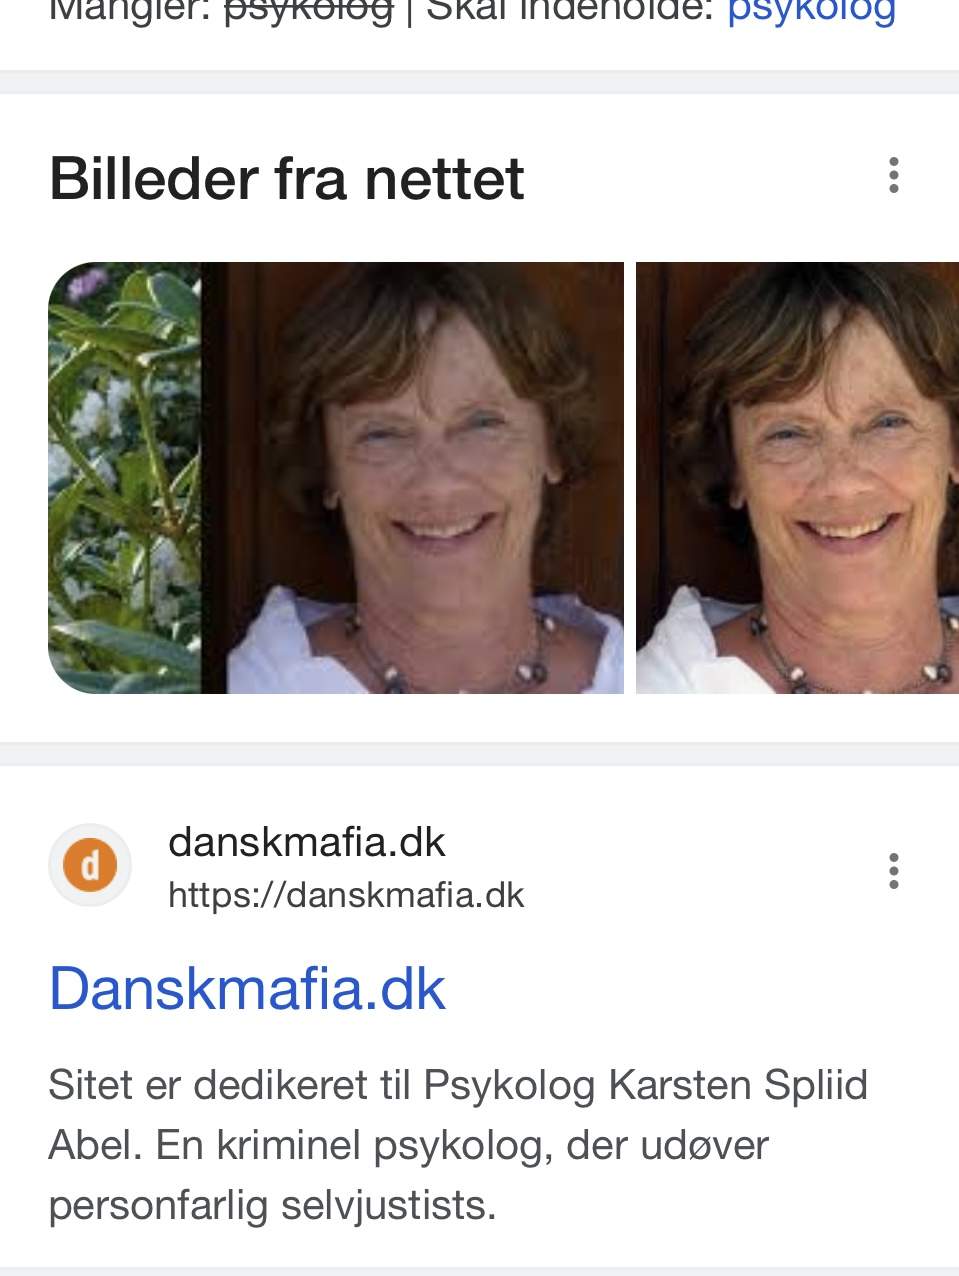 Danskmafia.dk